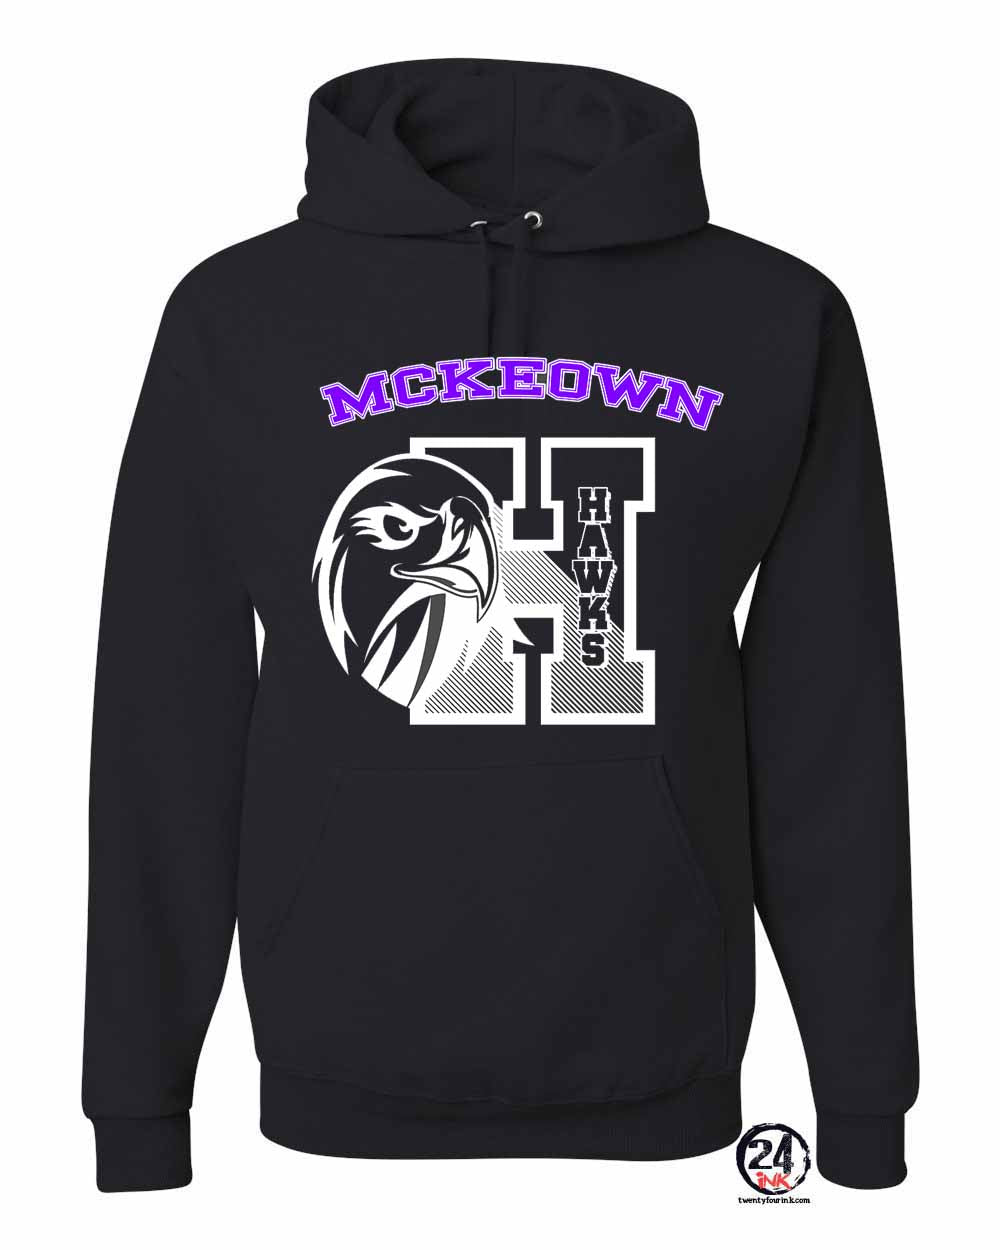 McKeown Design 10 Hooded Sweatshirt